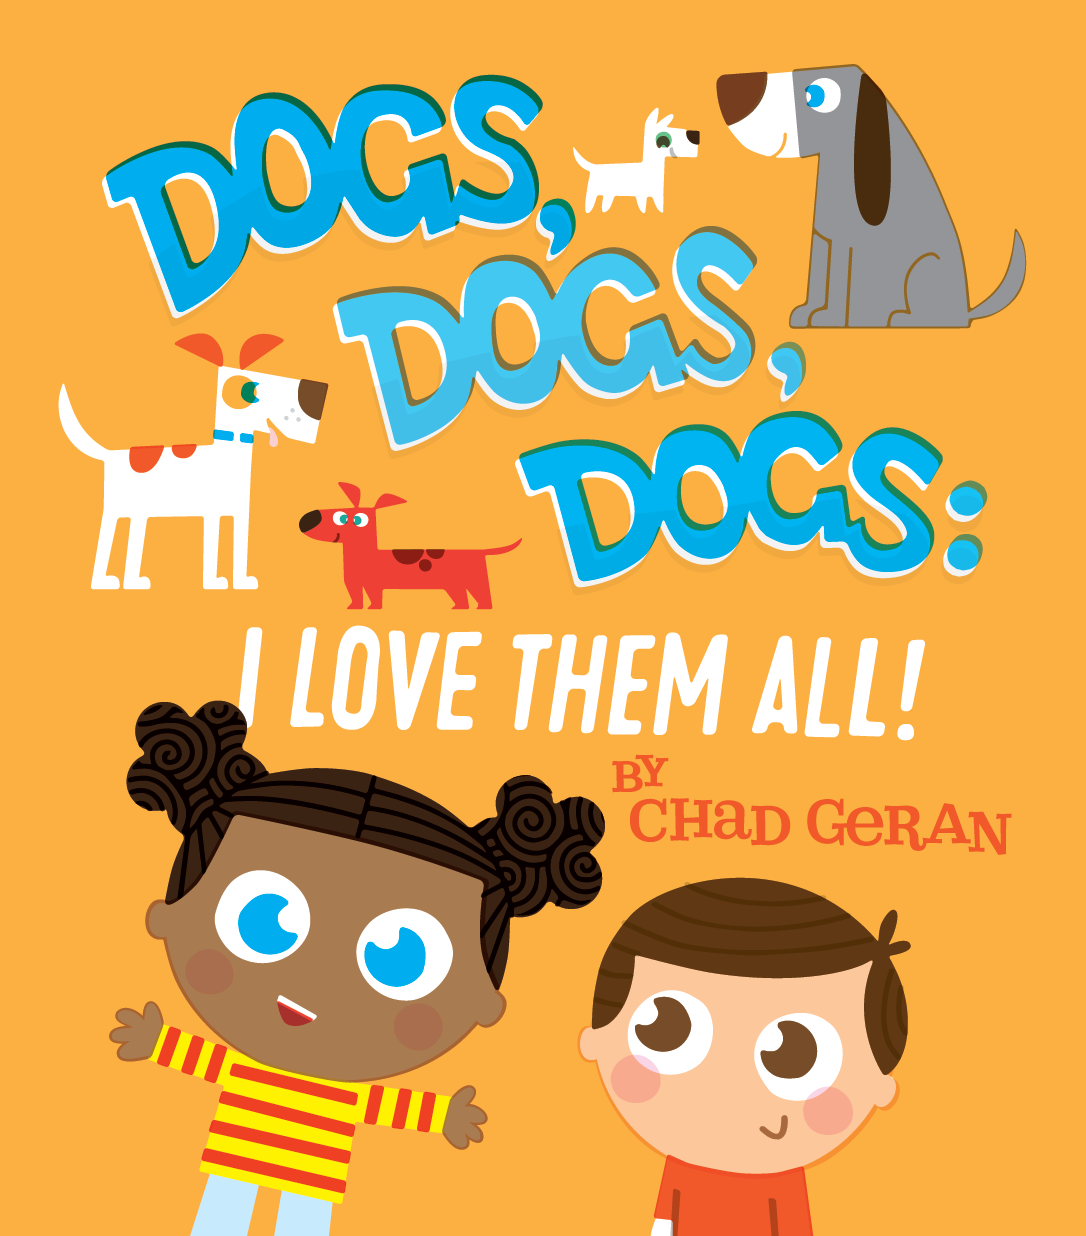 Chad Geran - Freelance Illustrator - Lifestyle, Children's Books